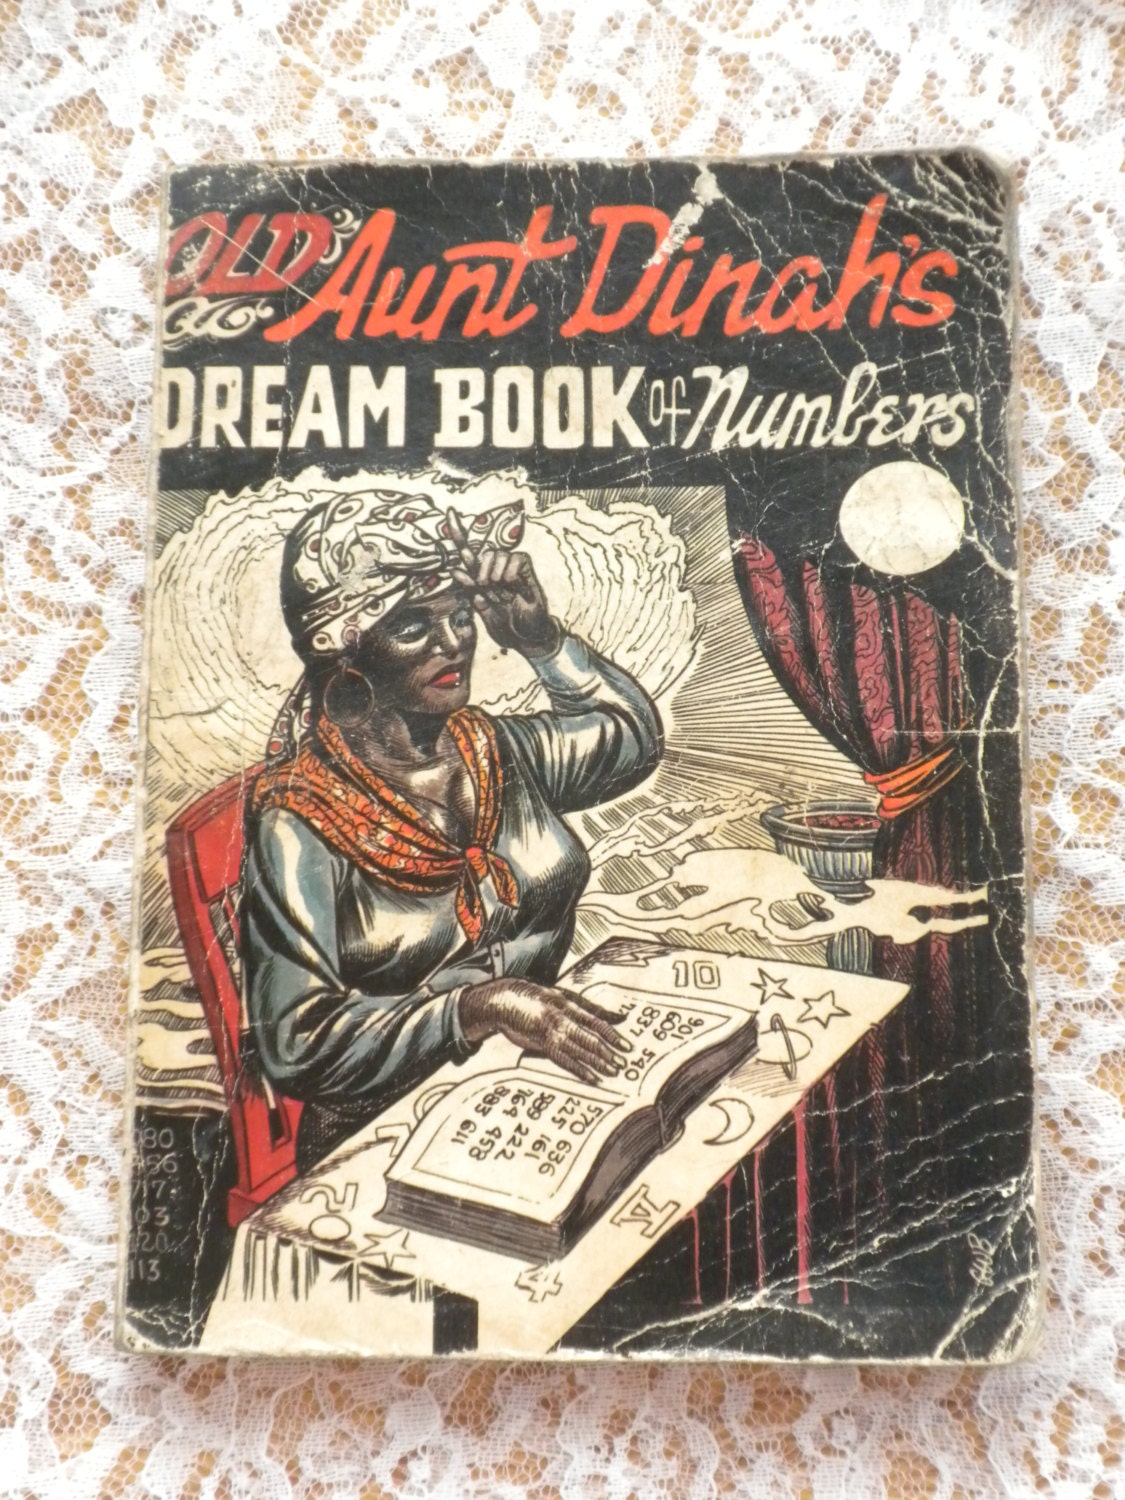 Vintage Hoodoo Book Old Aunt Dinahs Dream Book of